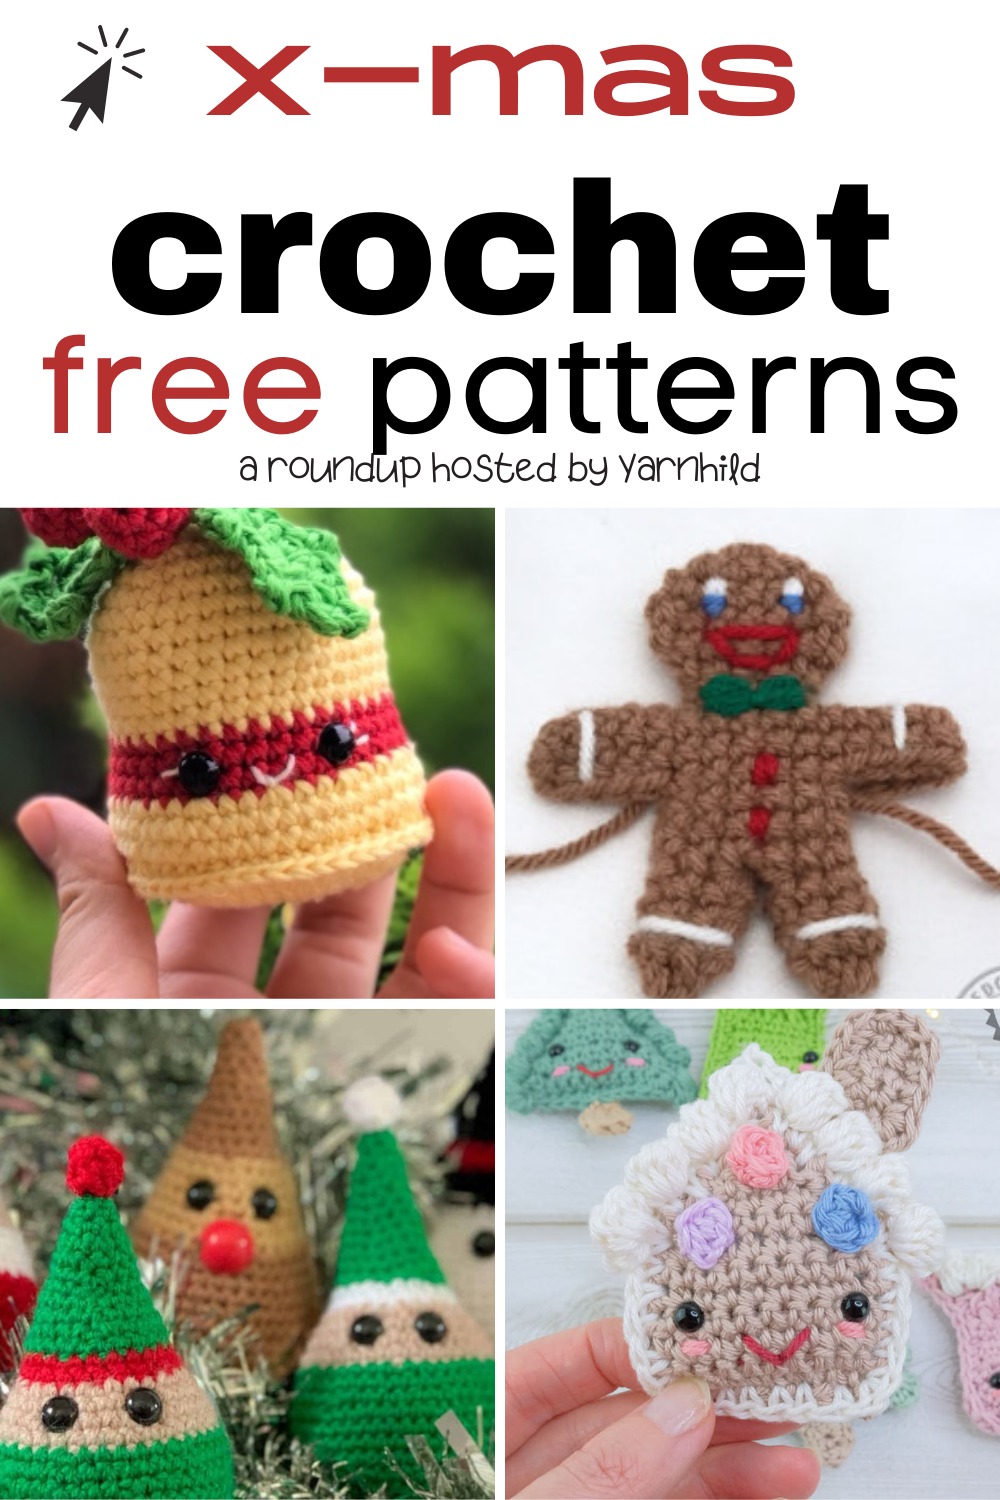 The cutest Christmas crochet ideas — Free crochet patterns for x-mas